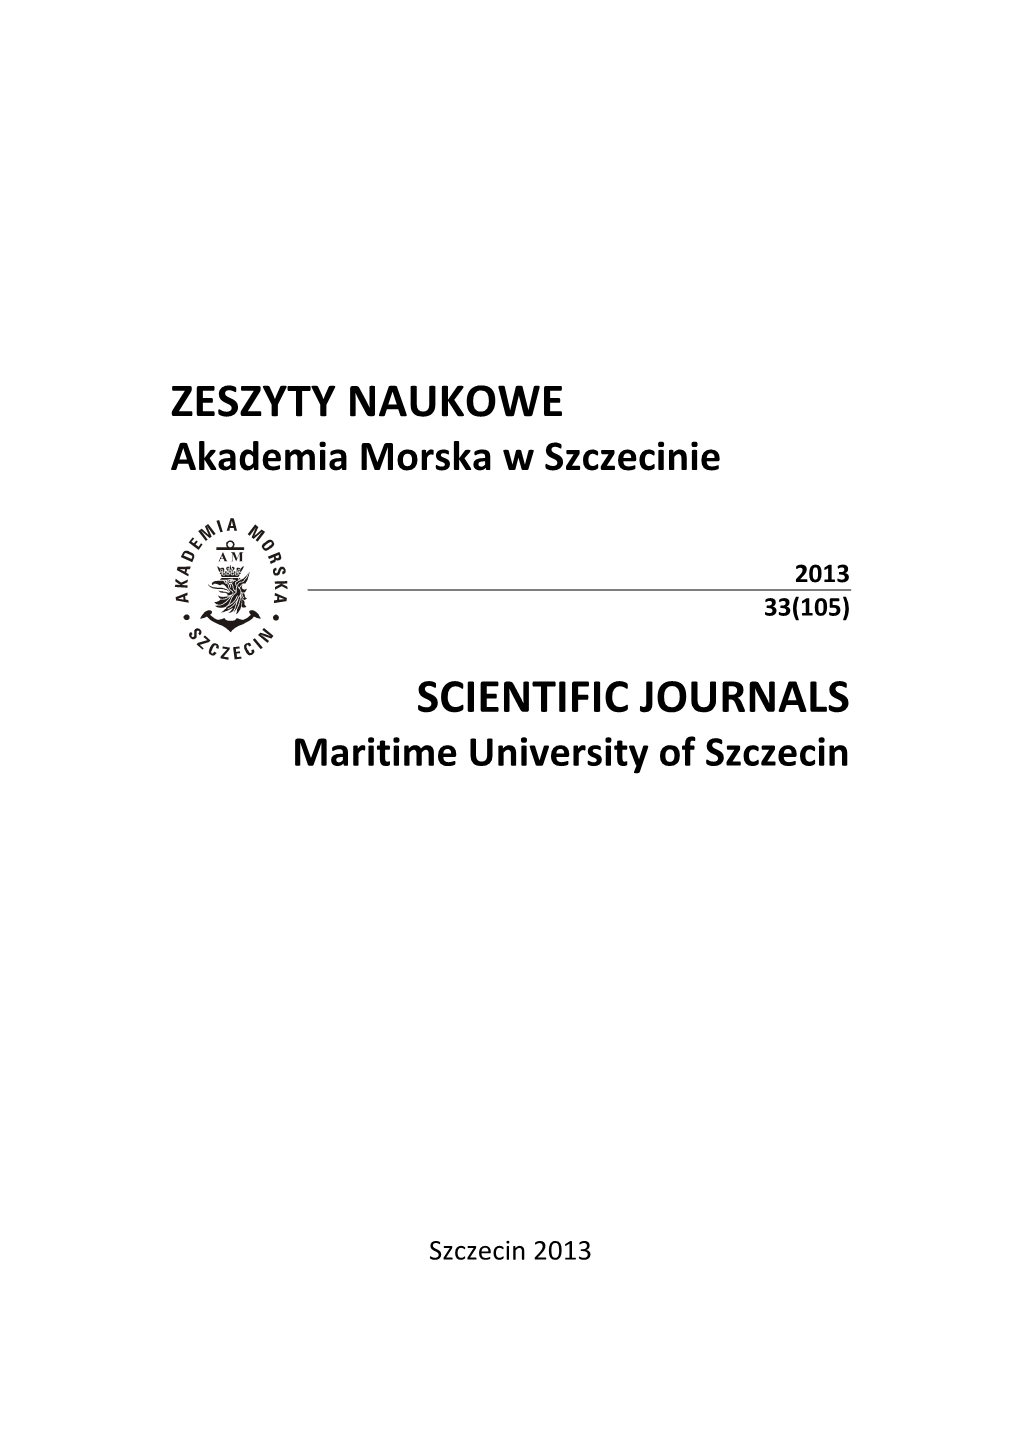 Zeszyty Naukowe Scientific Journals